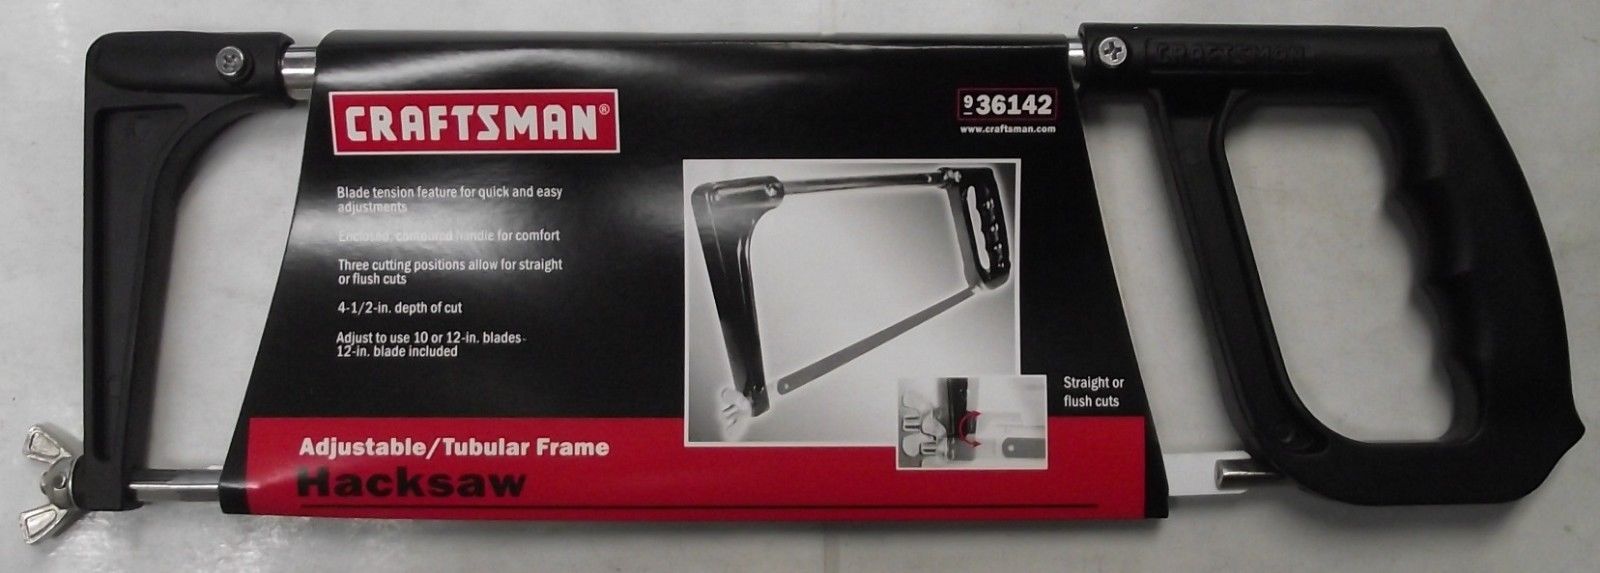 Craftsman 36142 10" or 12" Adjustable And Tubular Frame Hacksaw